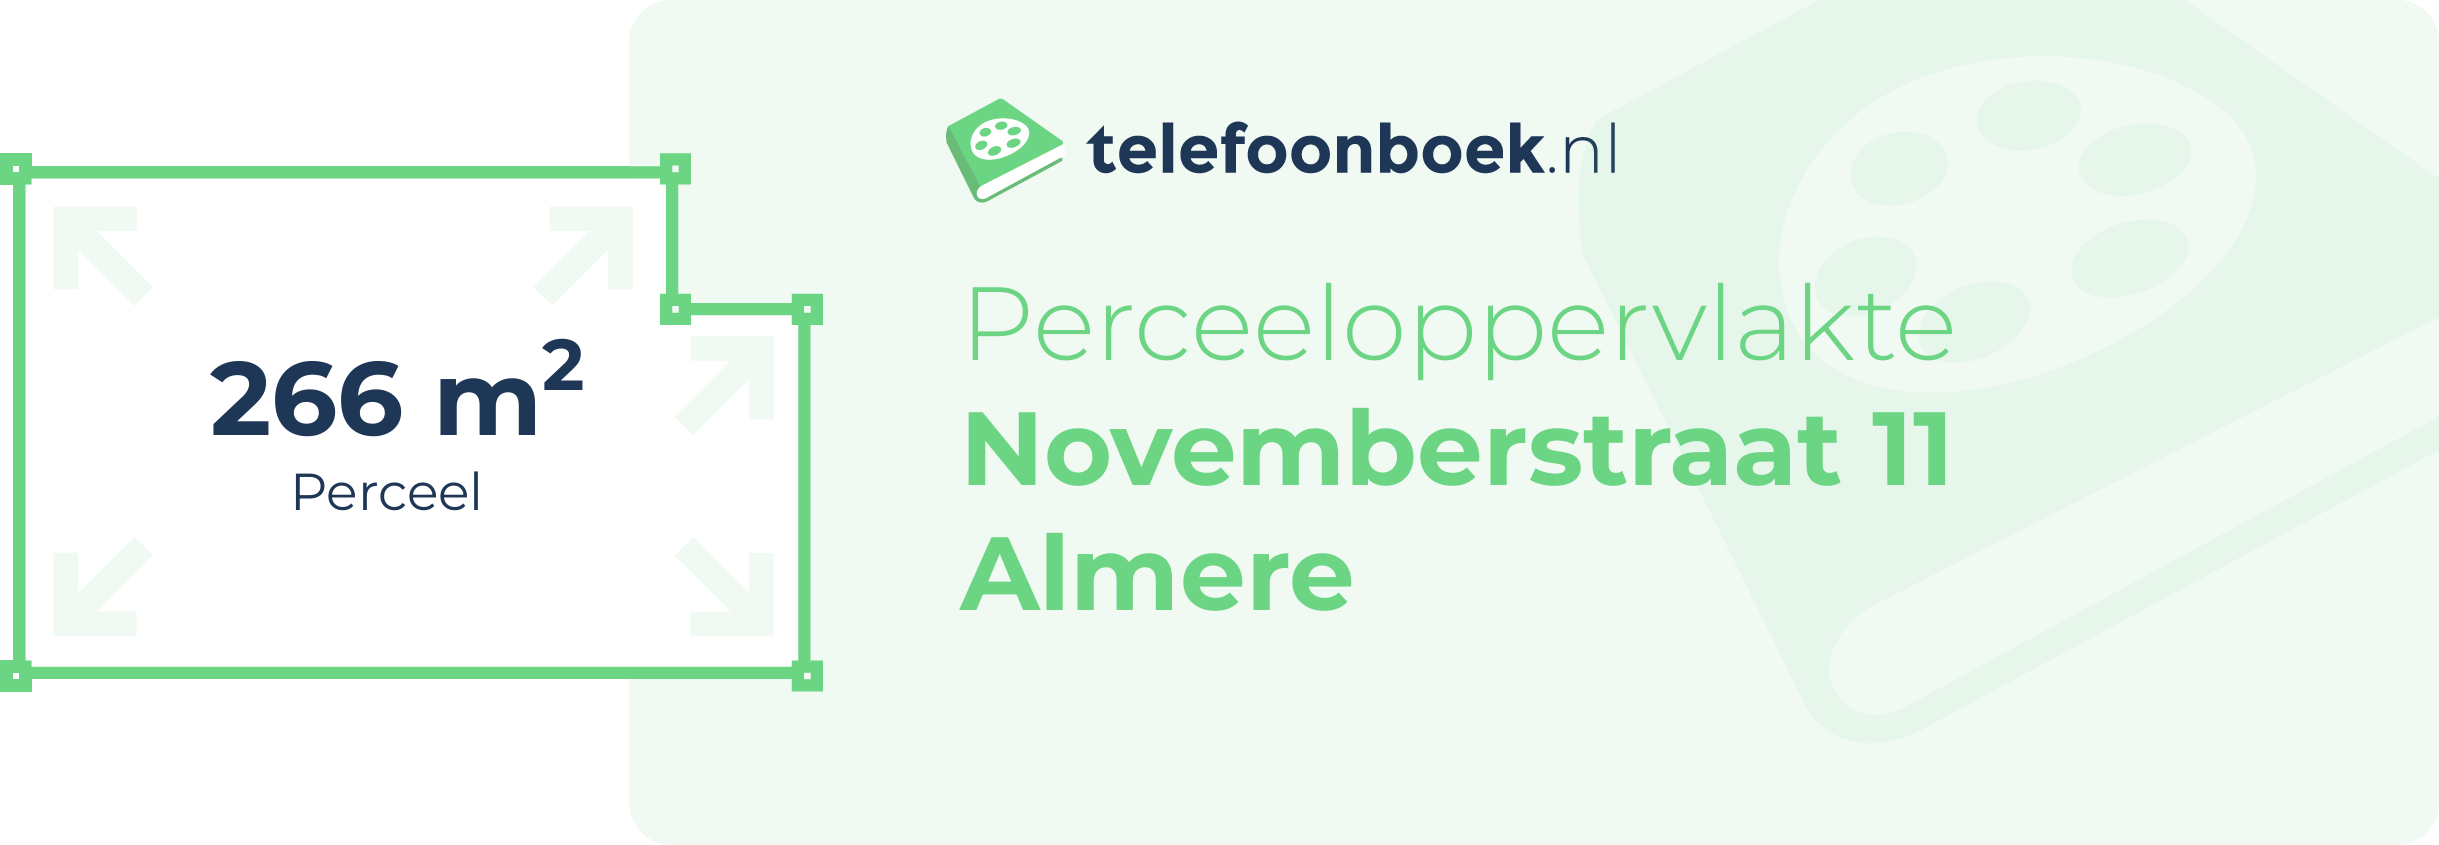 Perceeloppervlakte Novemberstraat 11 Almere